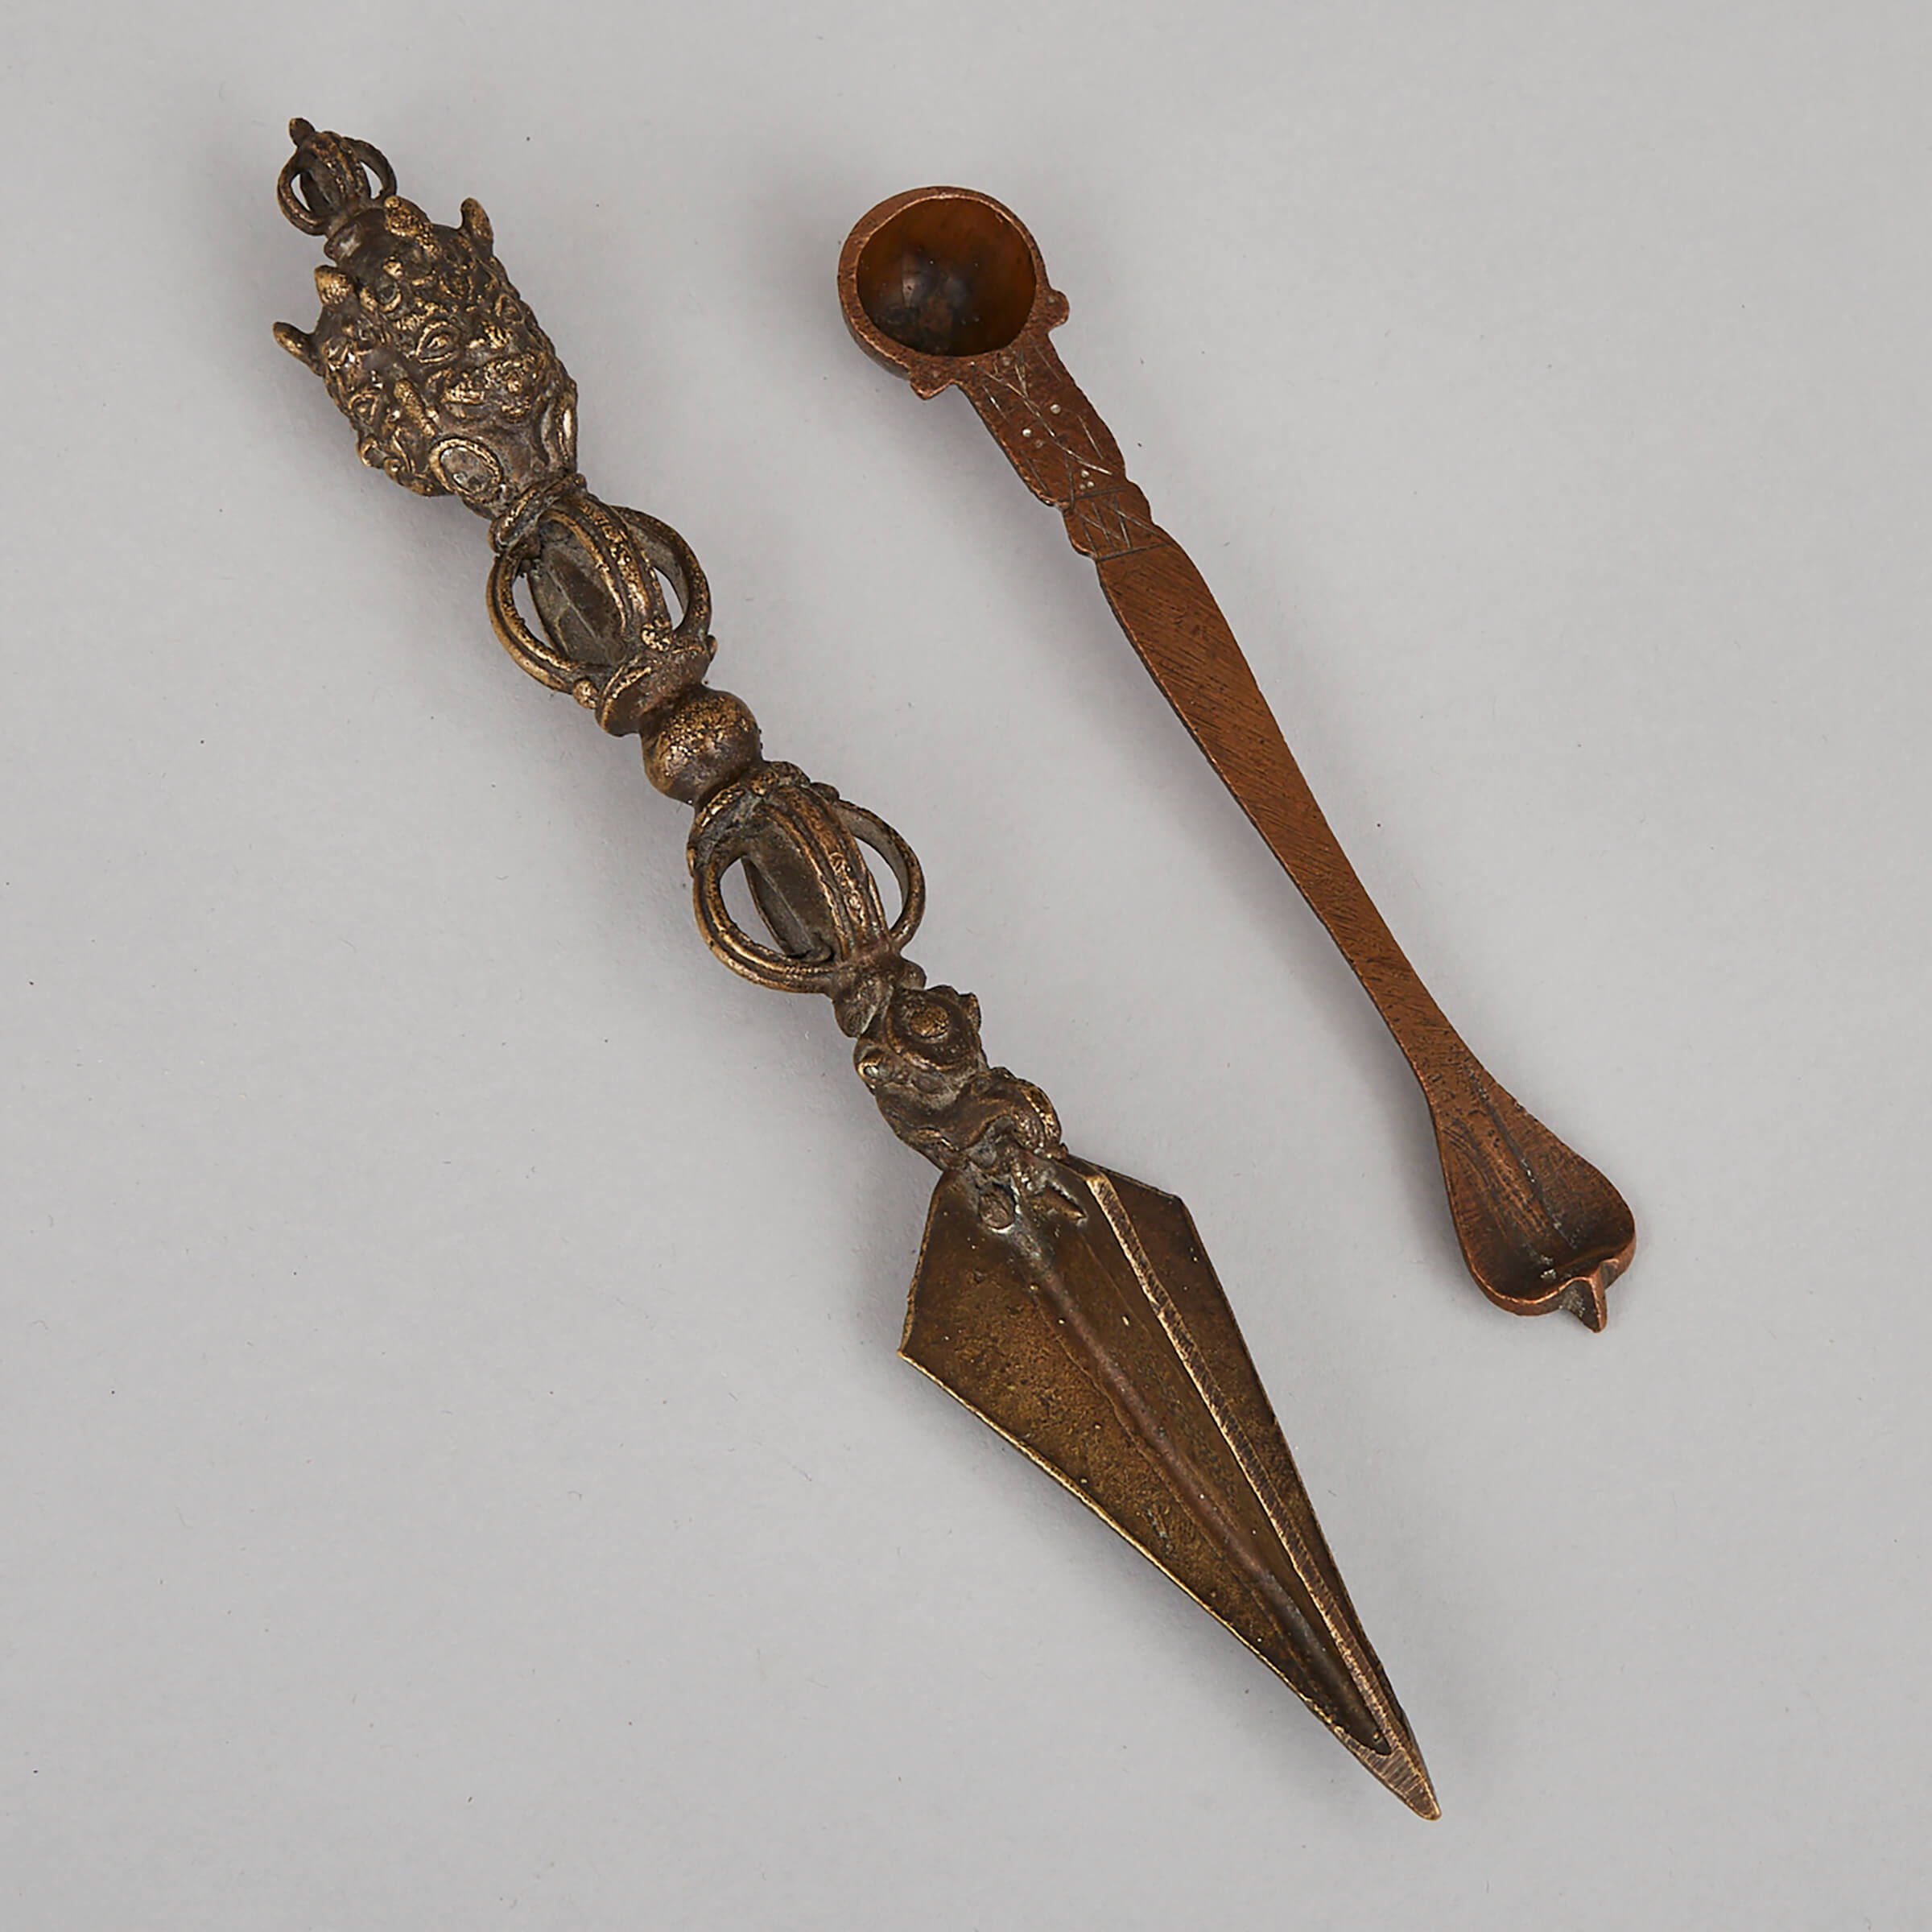 Buddhist Bronze Phurba Dagger with a Hindu Copper Pali Spoon, early 20th century